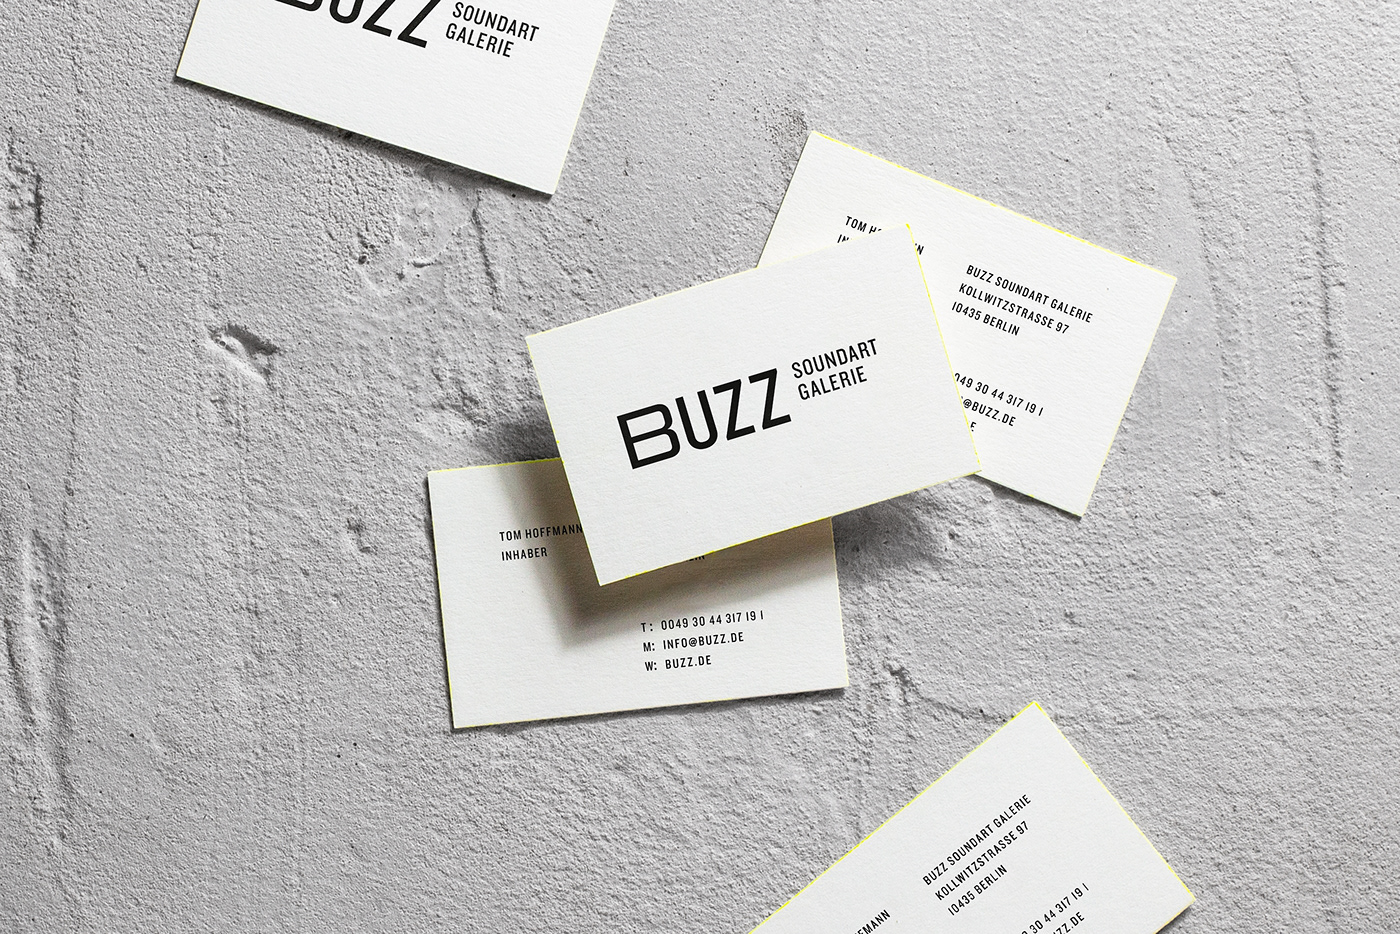 Business cards for Buzz Soundart Galerie
